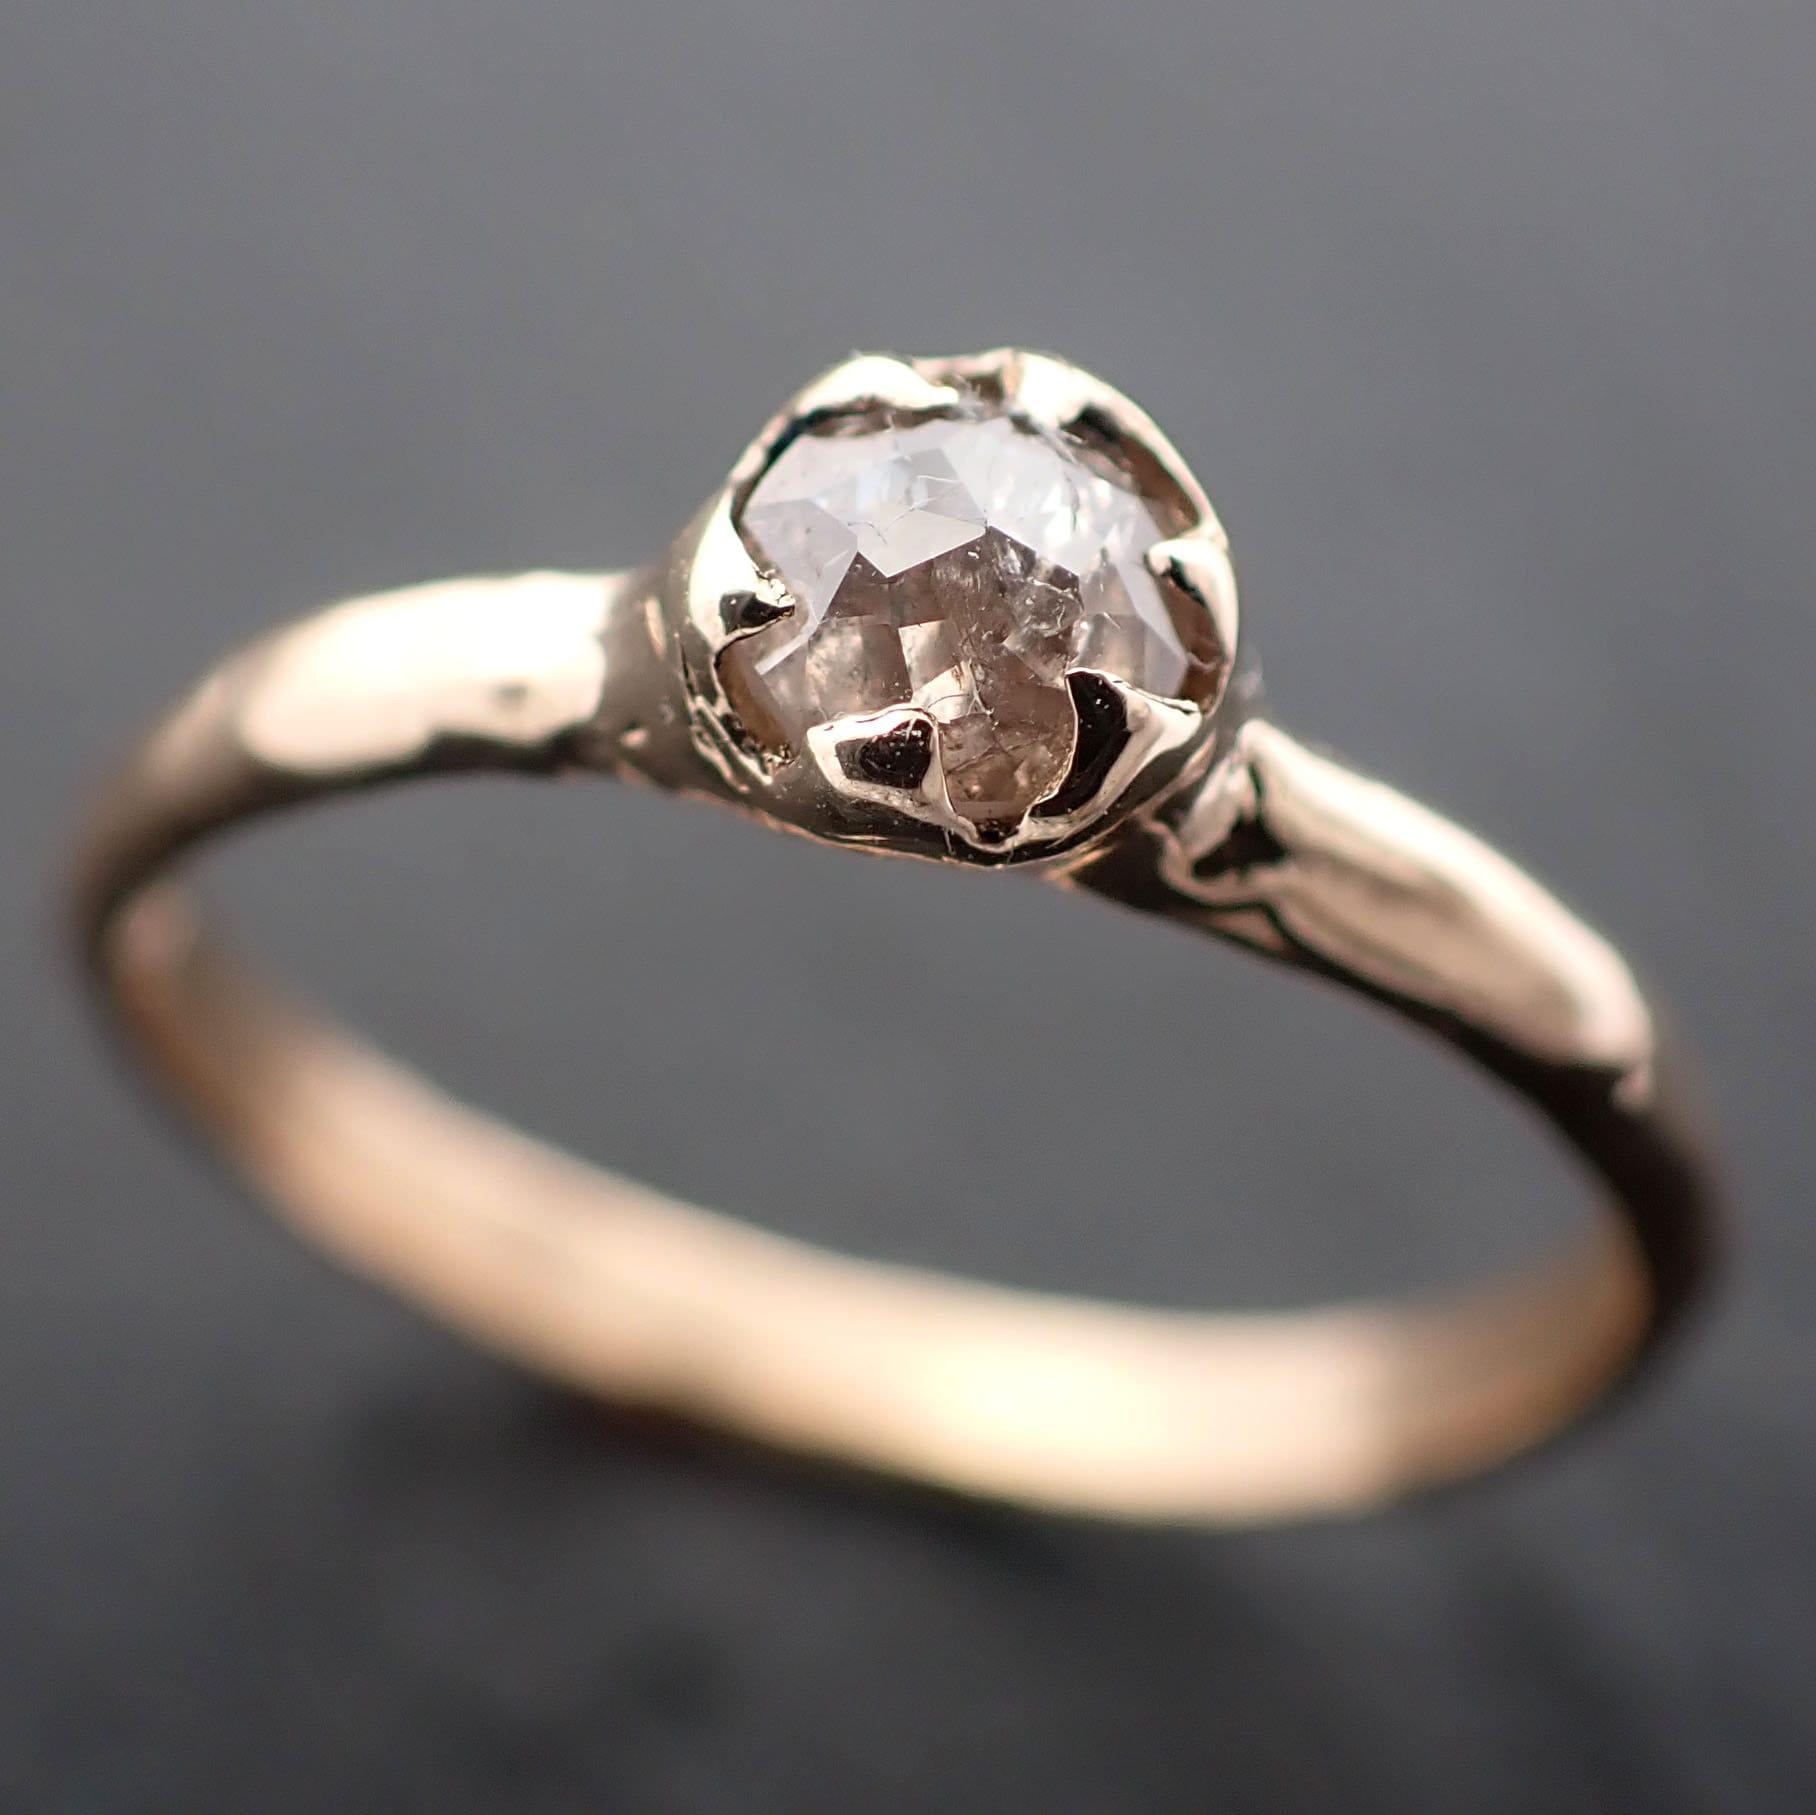 Fancy cut white Diamond Solitaire Engagement 14k yellow Gold Wedding Ring byAngeline 3516